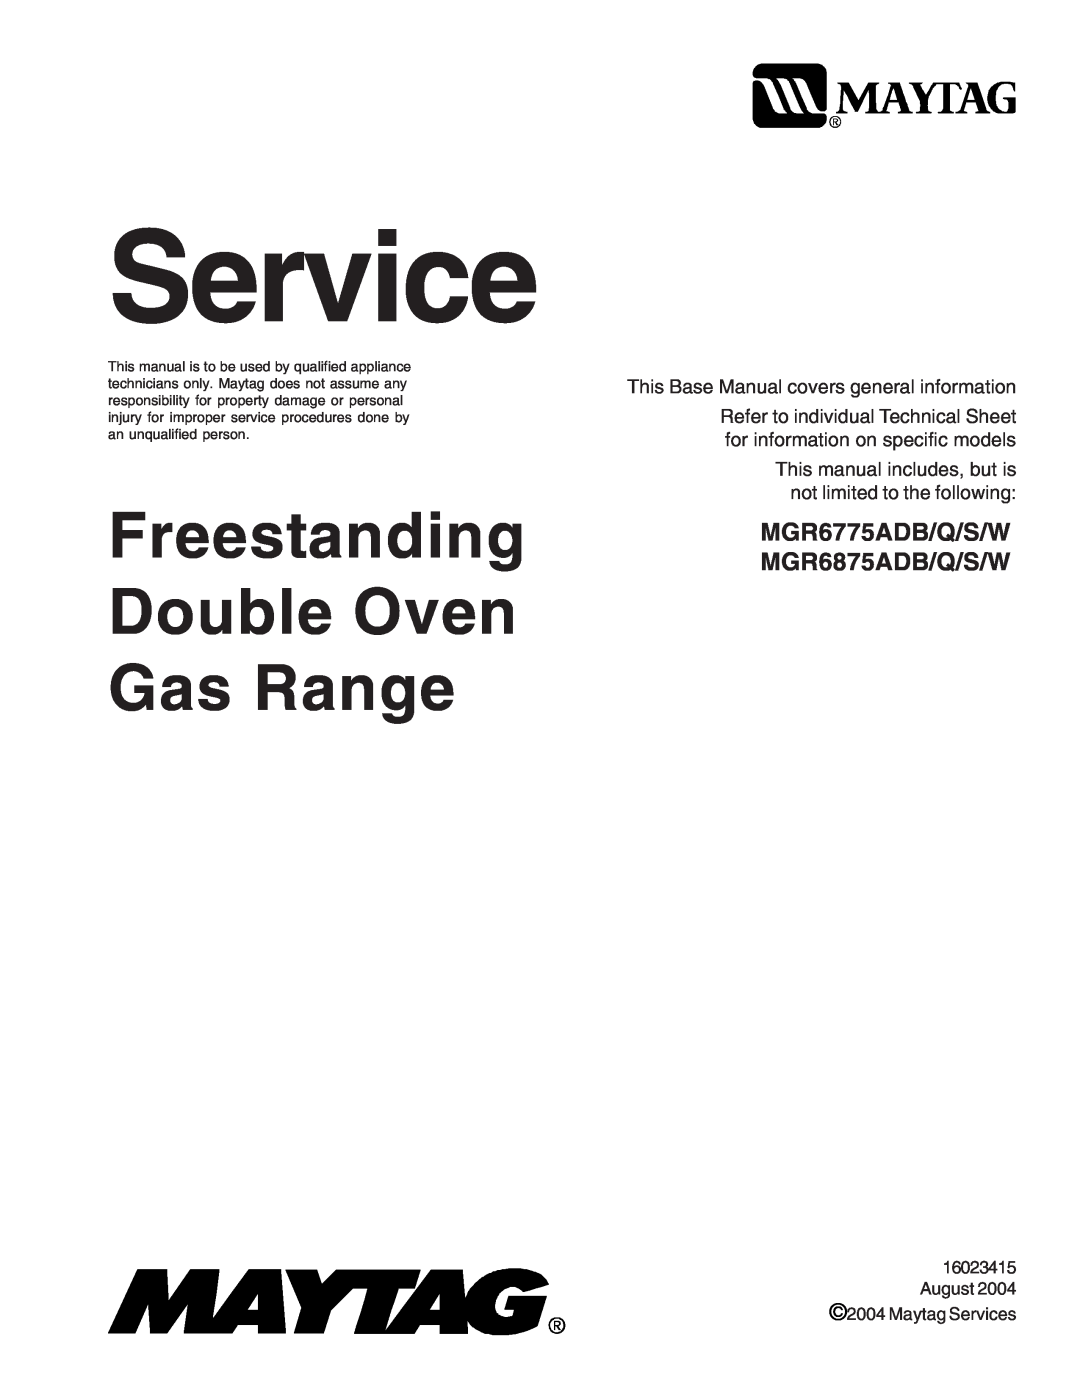 Maytag manual Service, MGR6775ADB/Q/S/W MGR6875ADB/Q/S/W, Freestanding Double Oven Gas Range 